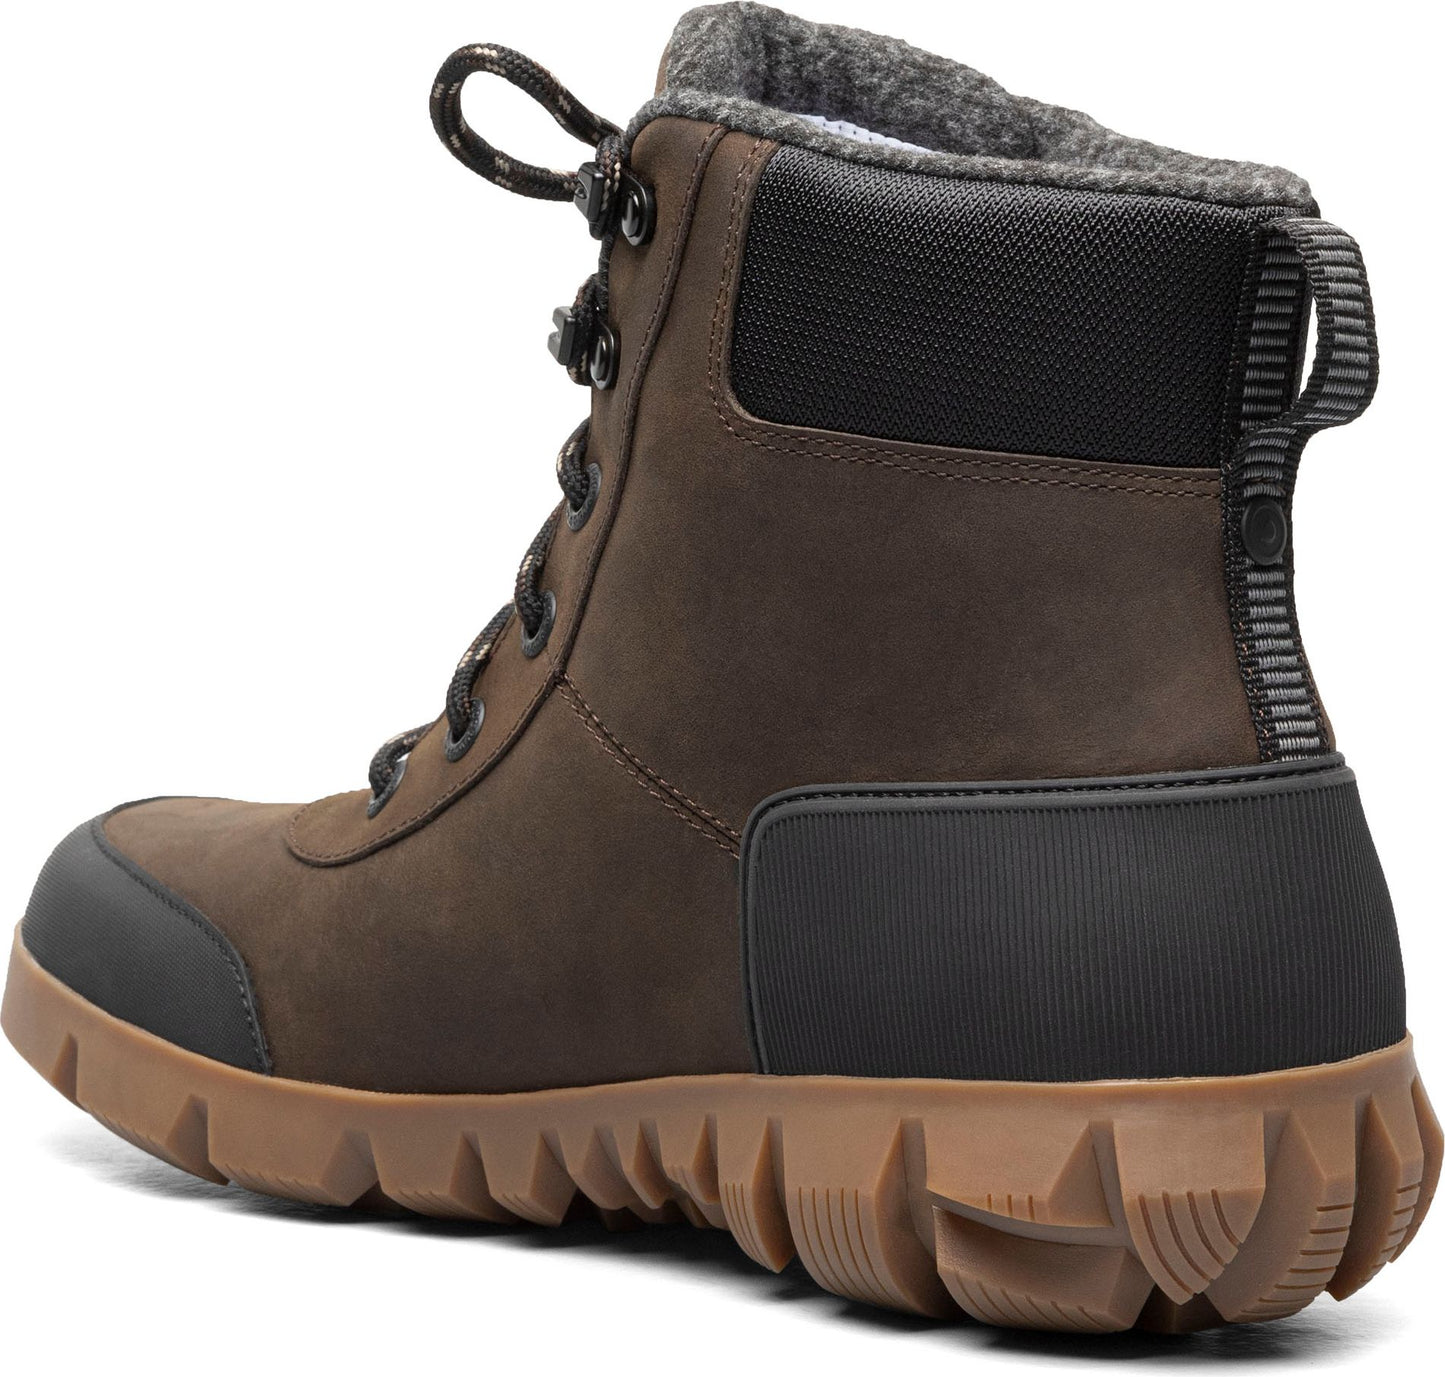 BOGS Boots Arcata Urban Leather Mid Chocolate